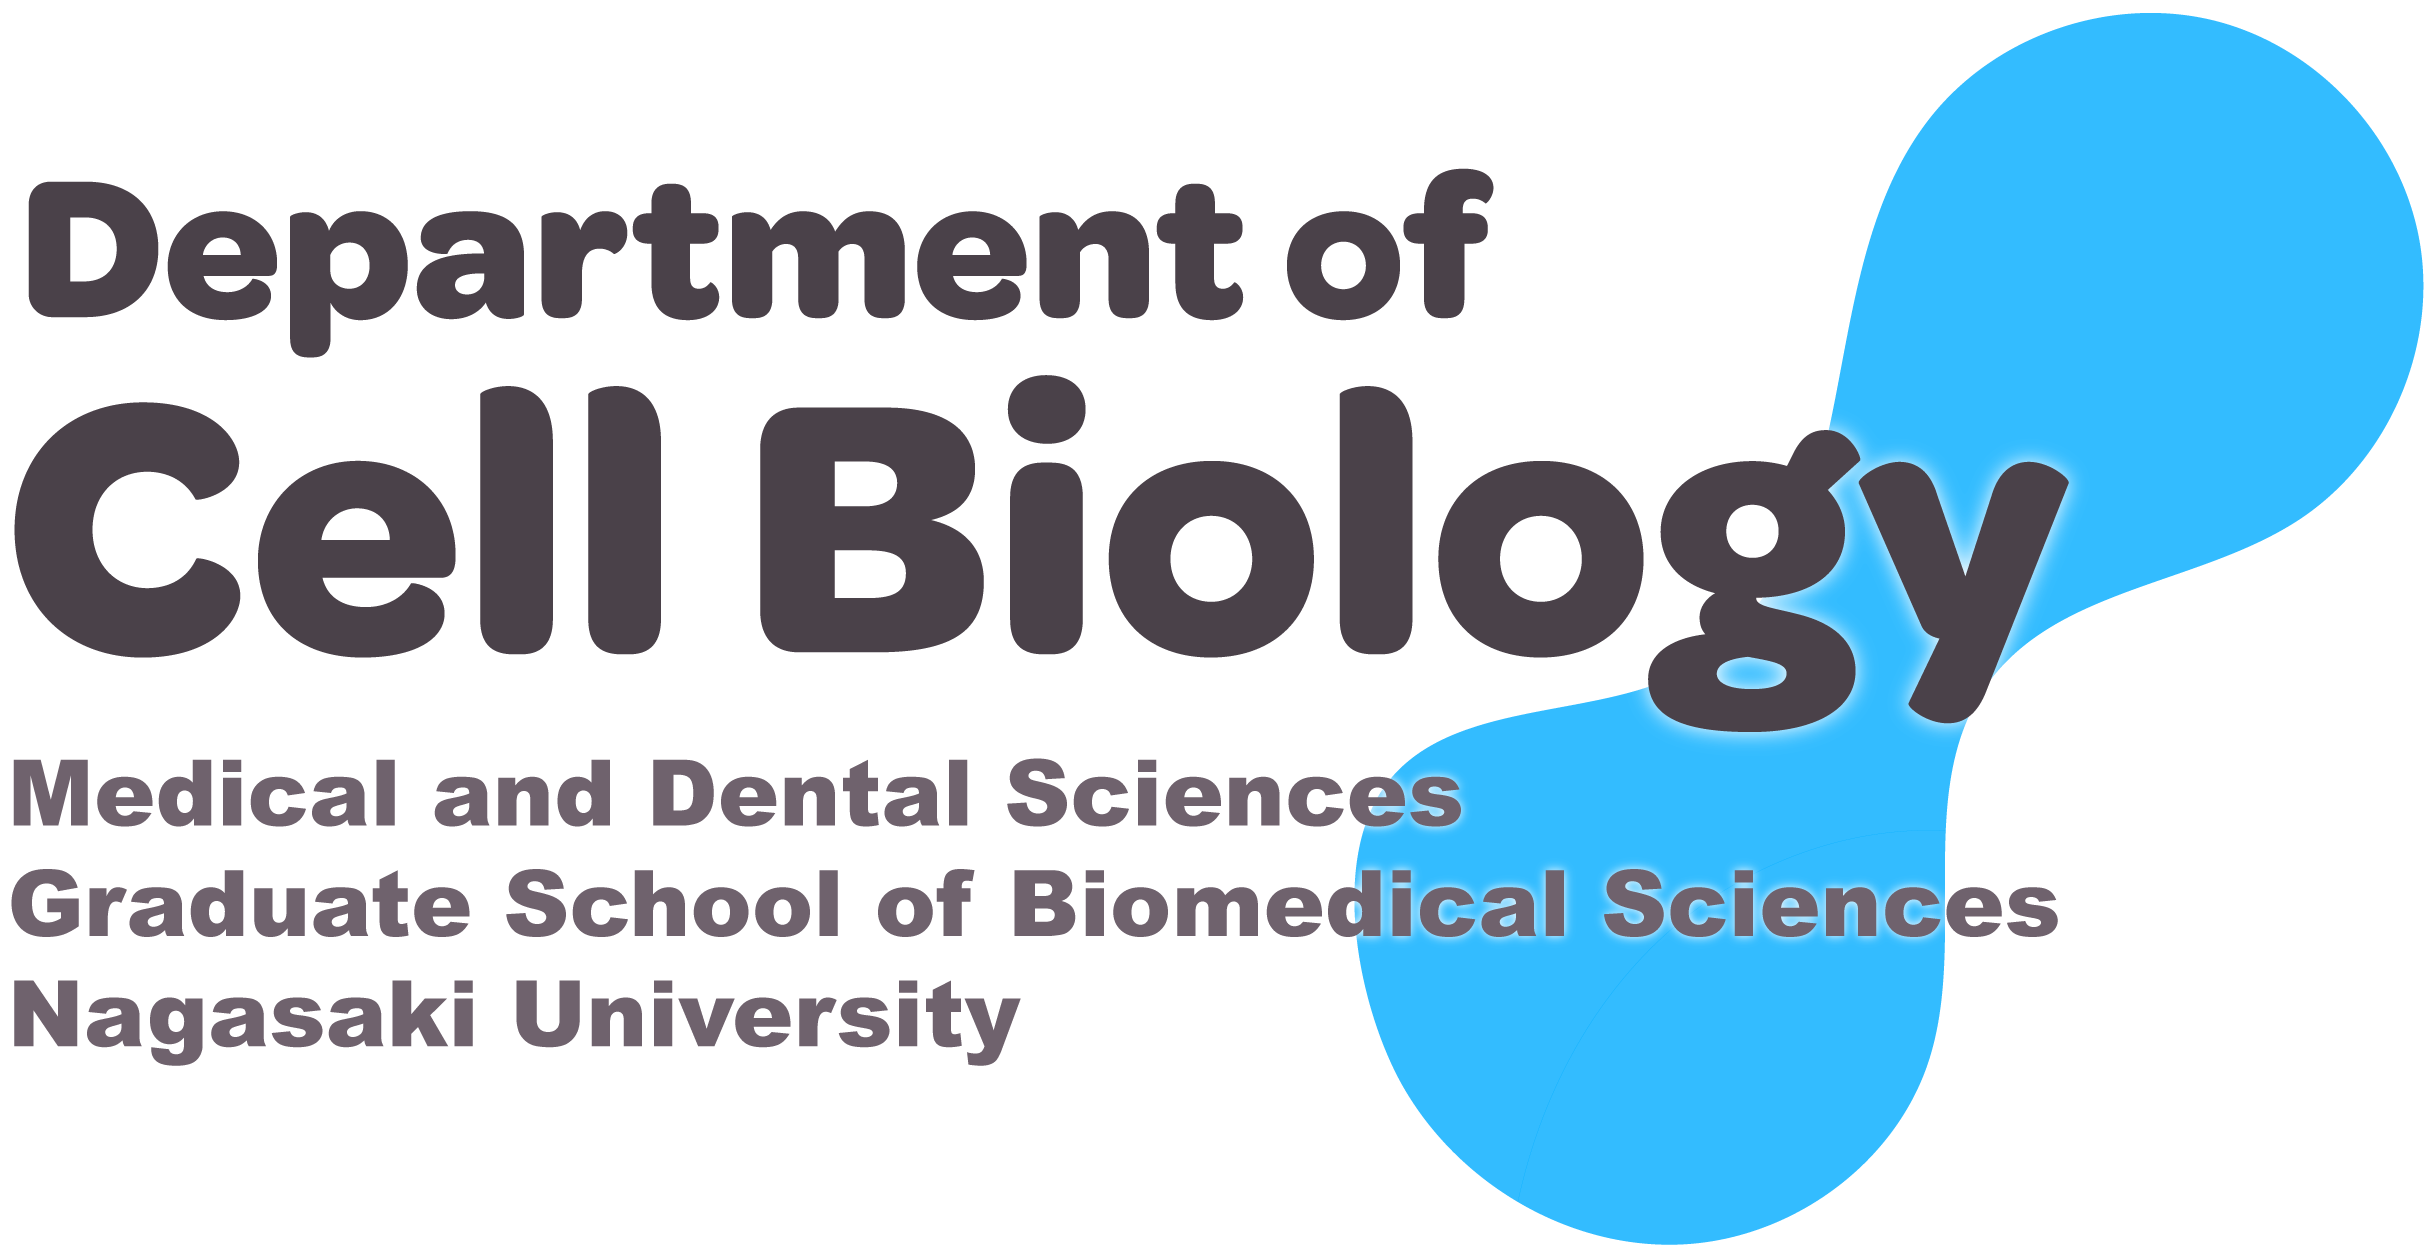 Department of Cell Biology, Medical and Dental Sciences, Nagasaki University Graduate School of Biomedical Sciences